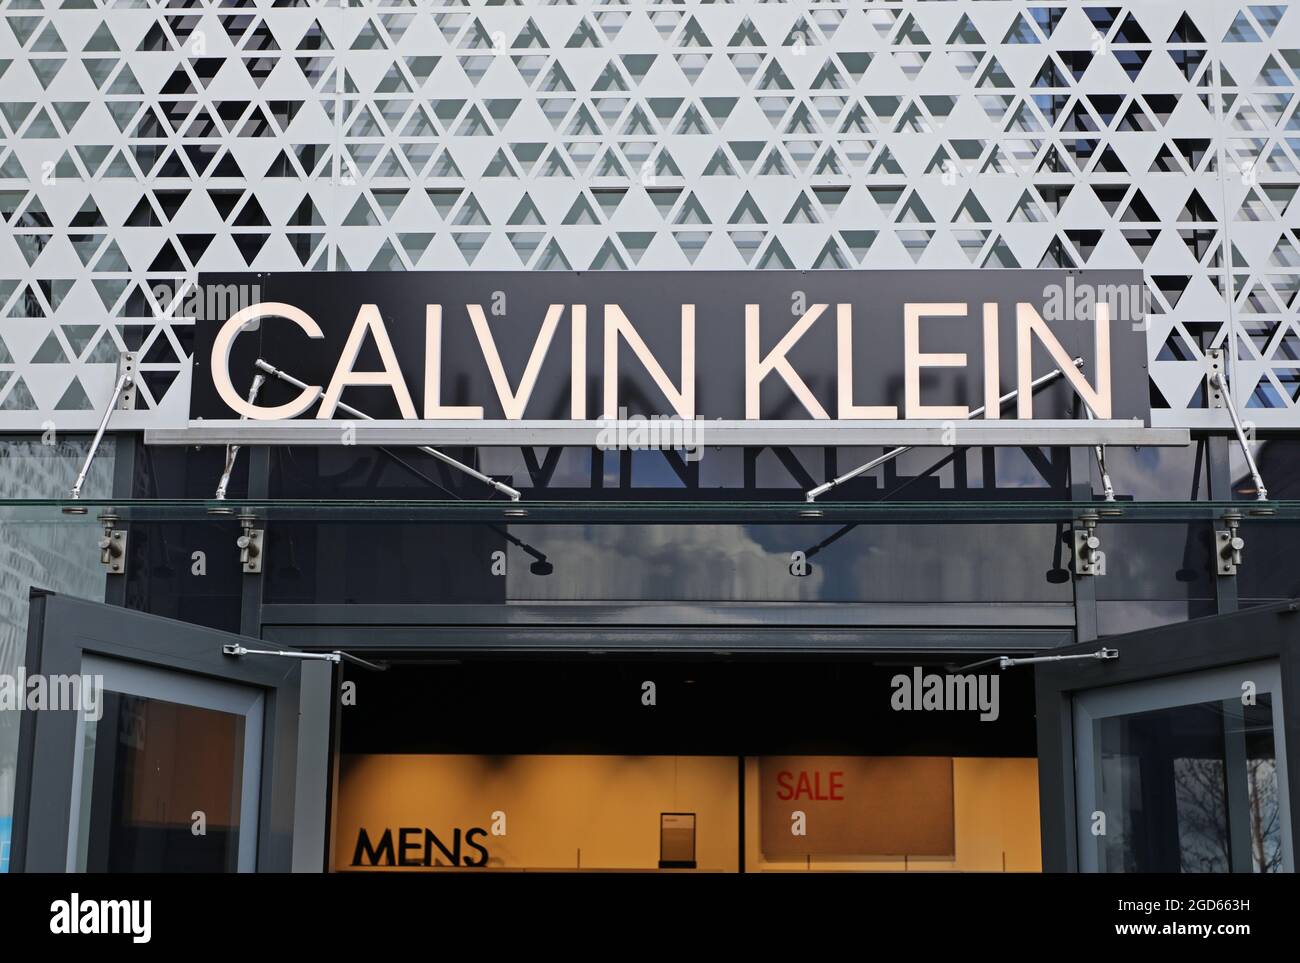 Cartello Calvin Klein all'Hede Fashion Outlet Foto stock - Alamy